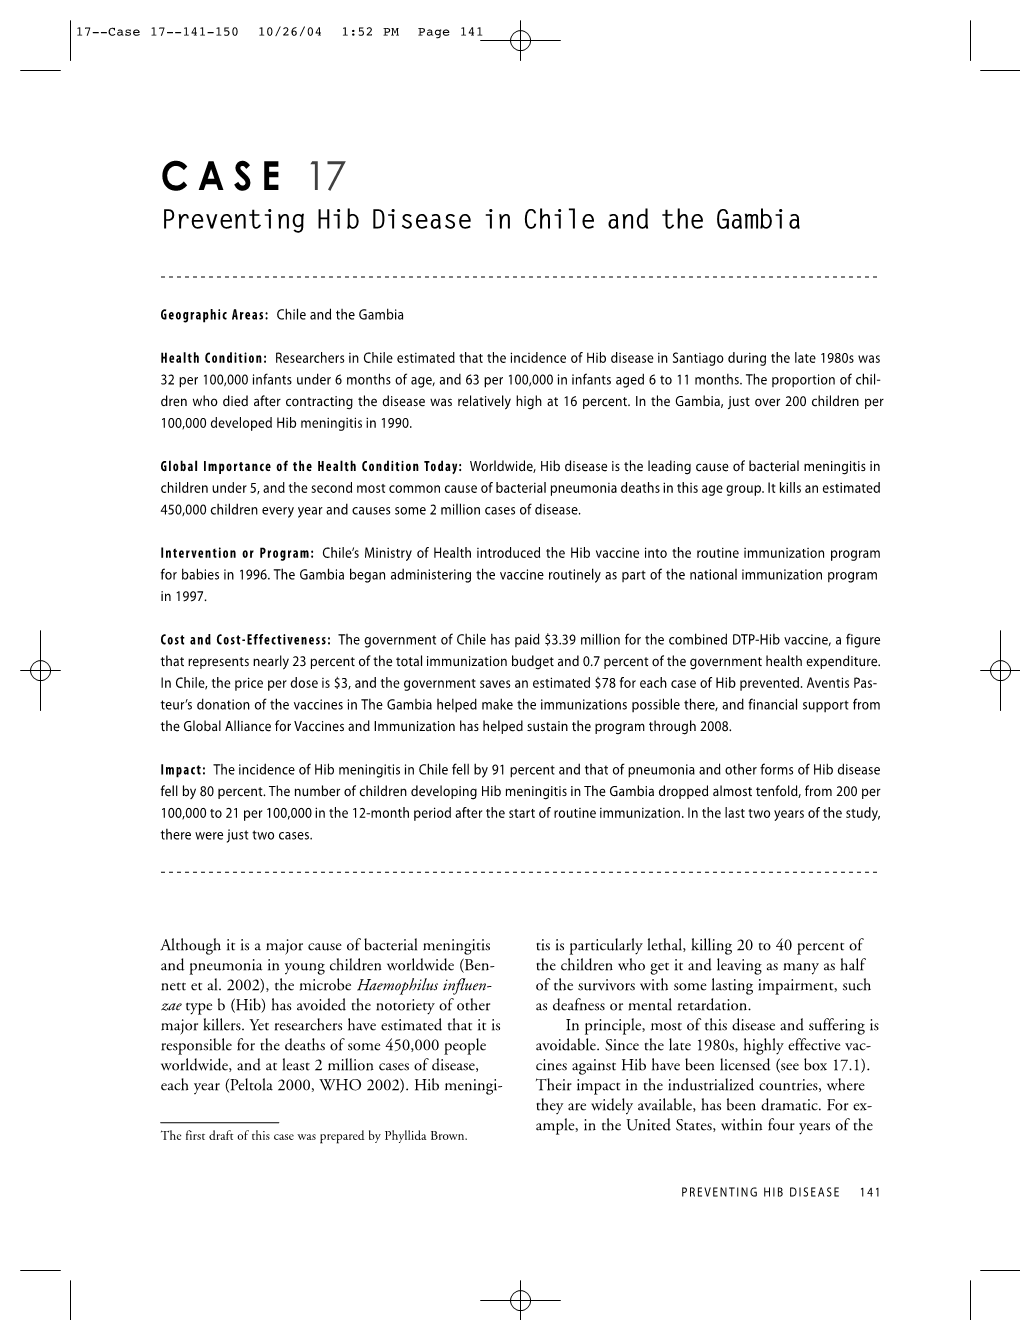 Case 17--141-150 10/26/04 1:52 PM Page 141